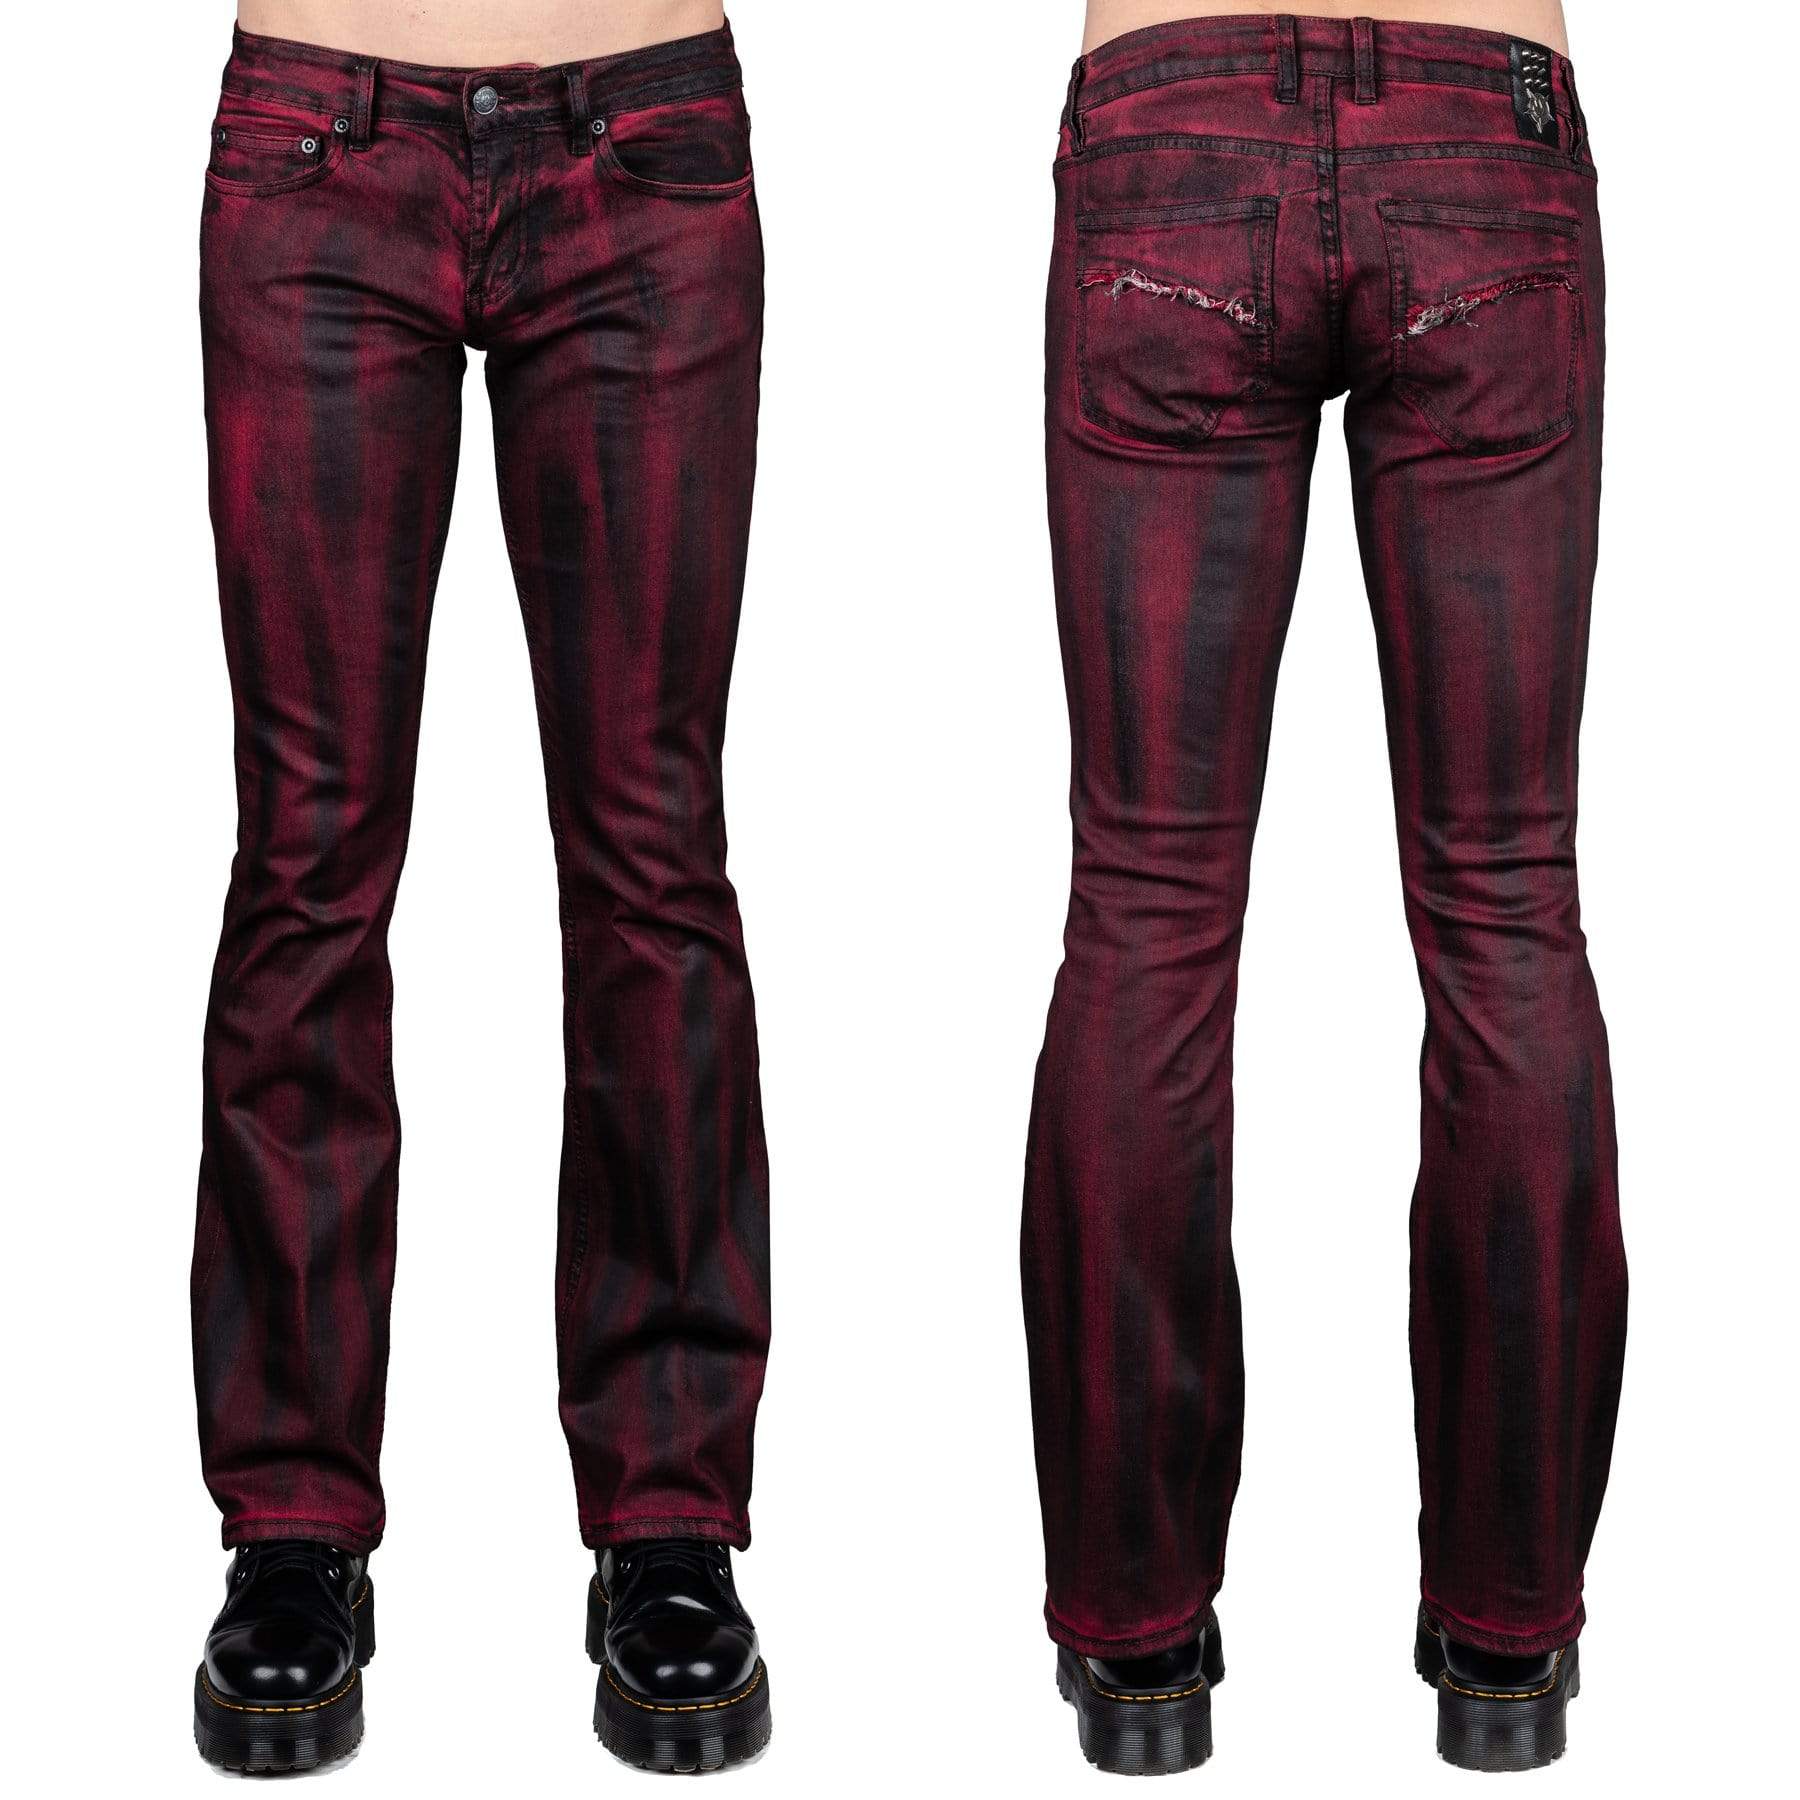 Wornstar Clothing Hellraiser Coated Mens Jeans - Crimson